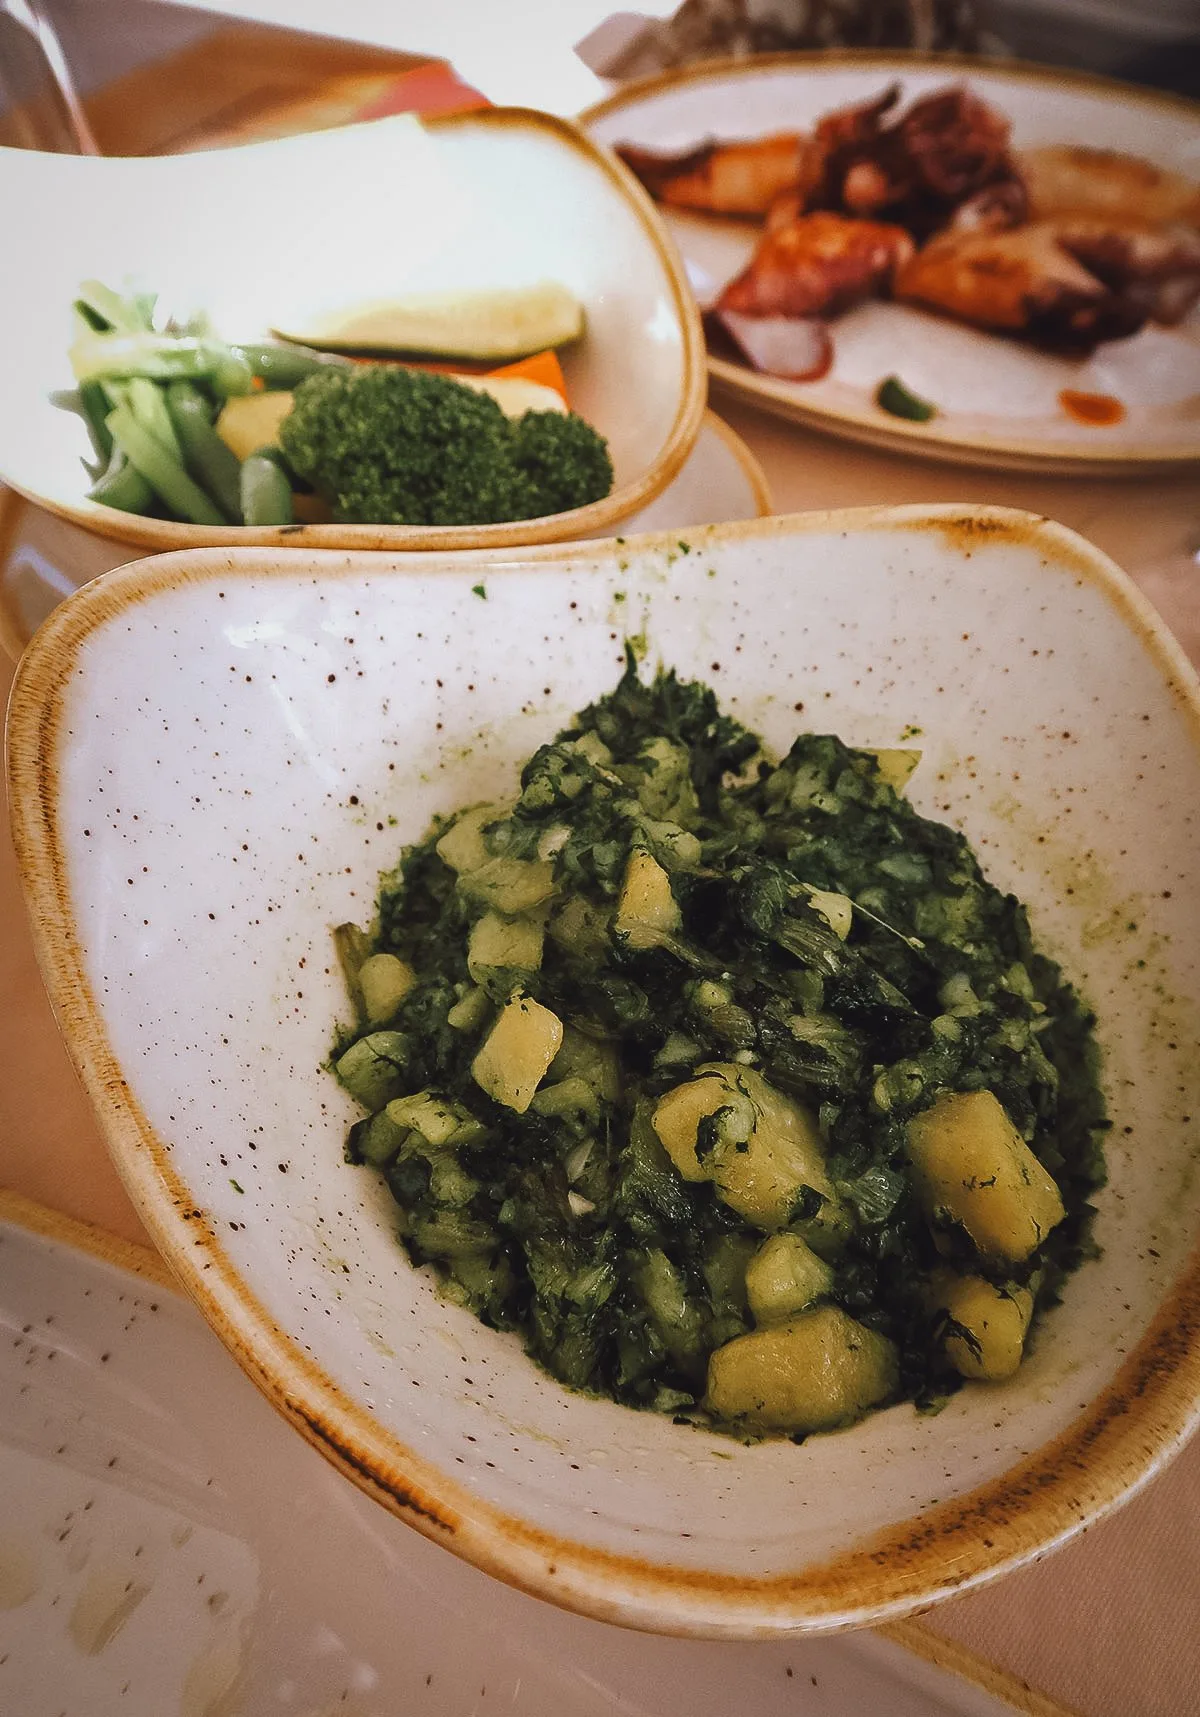 Vegetable side dishes at a restaurant in Dubrovnik